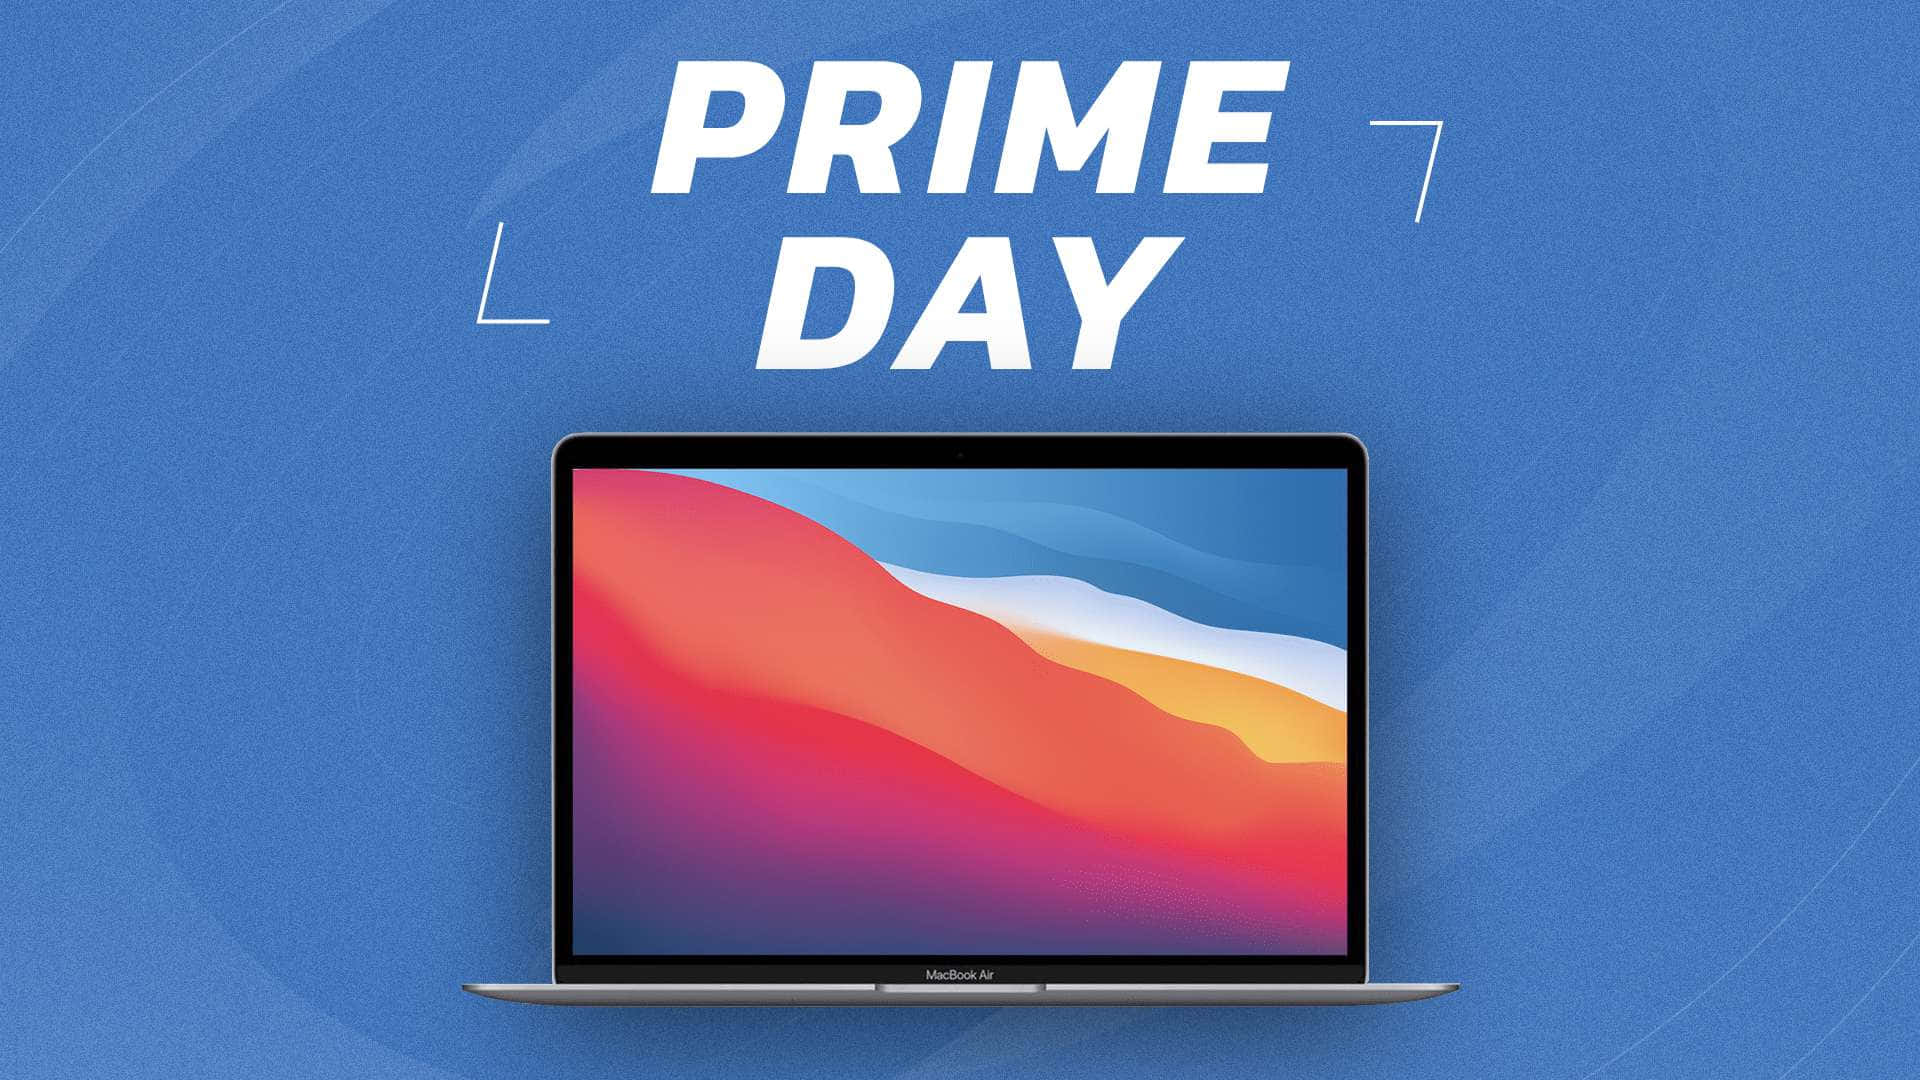 Prime Day Laptop Deal Wallpaper